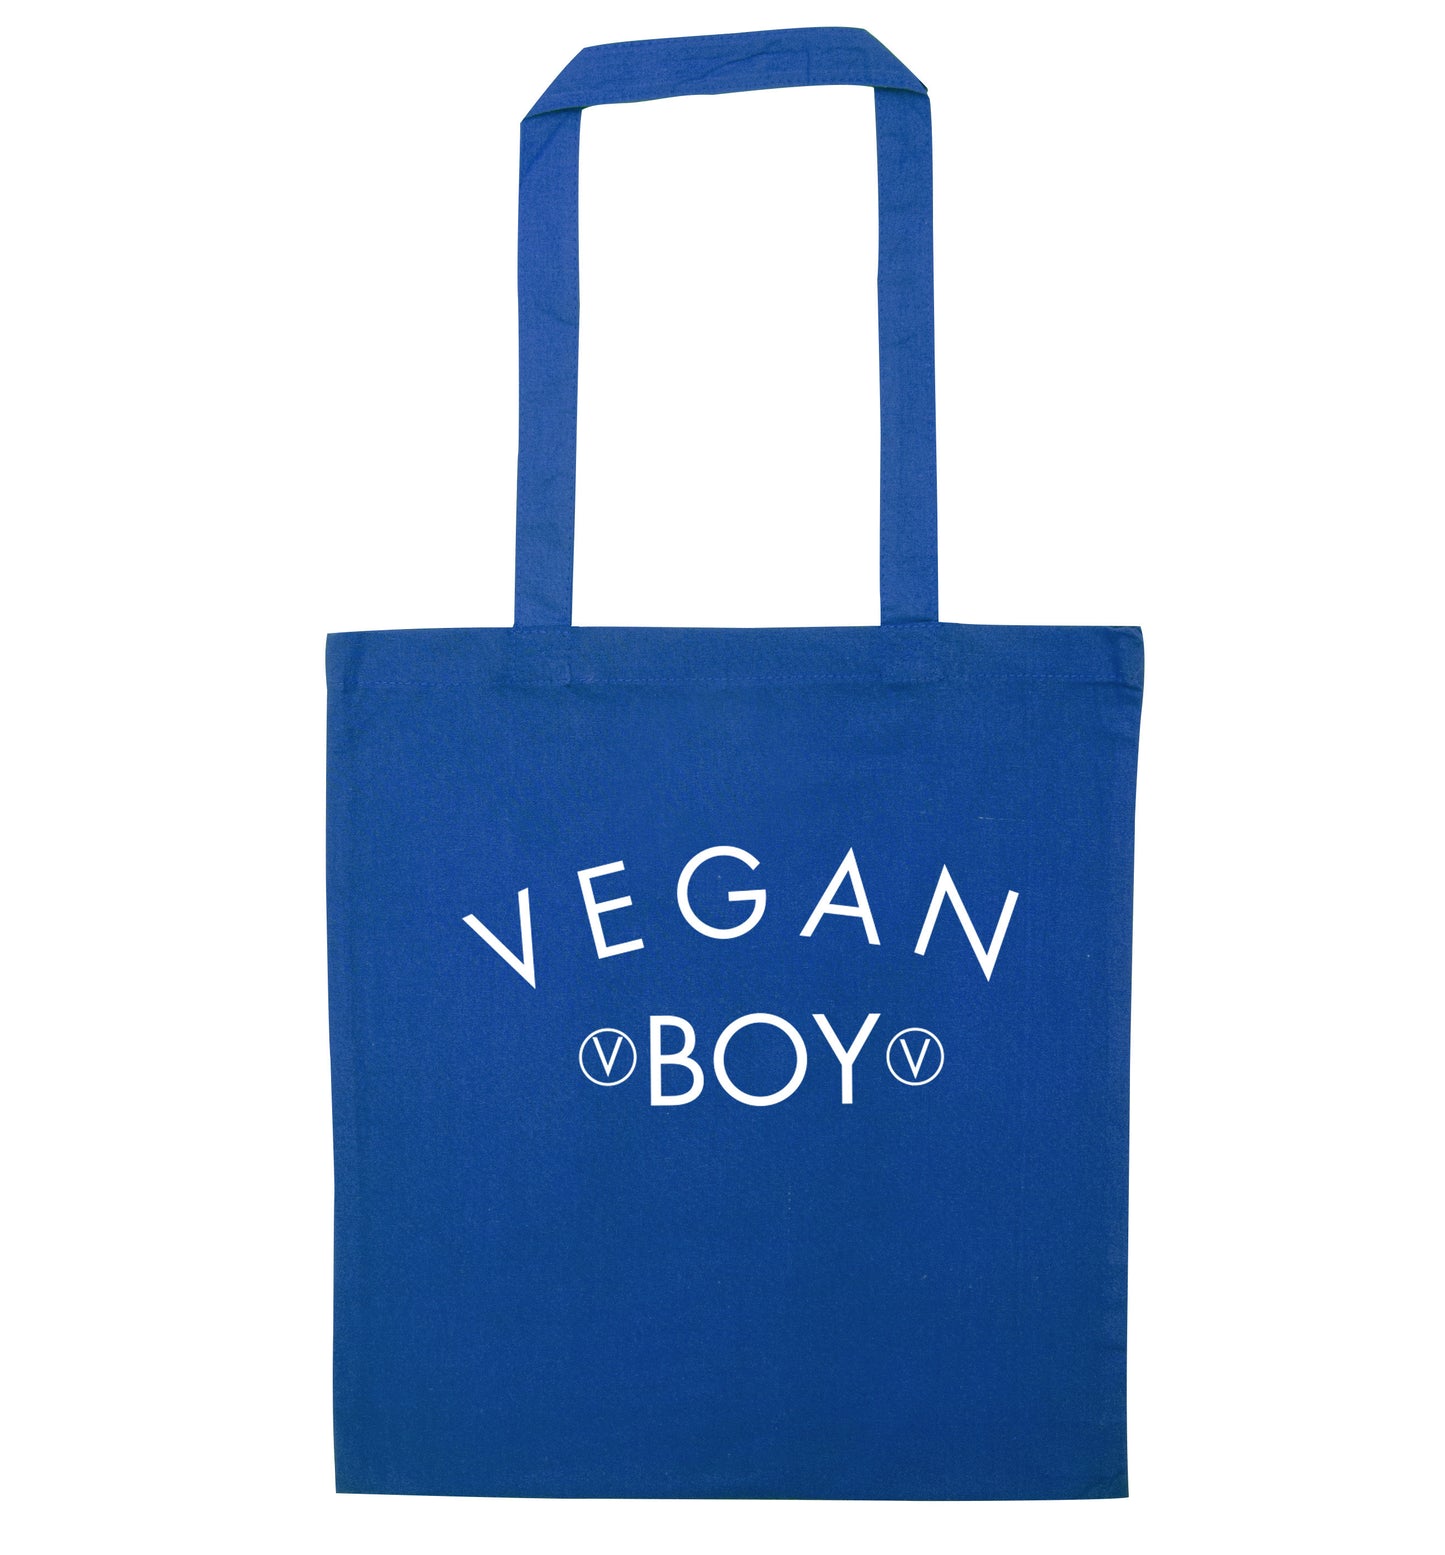 Vegan boy blue tote bag